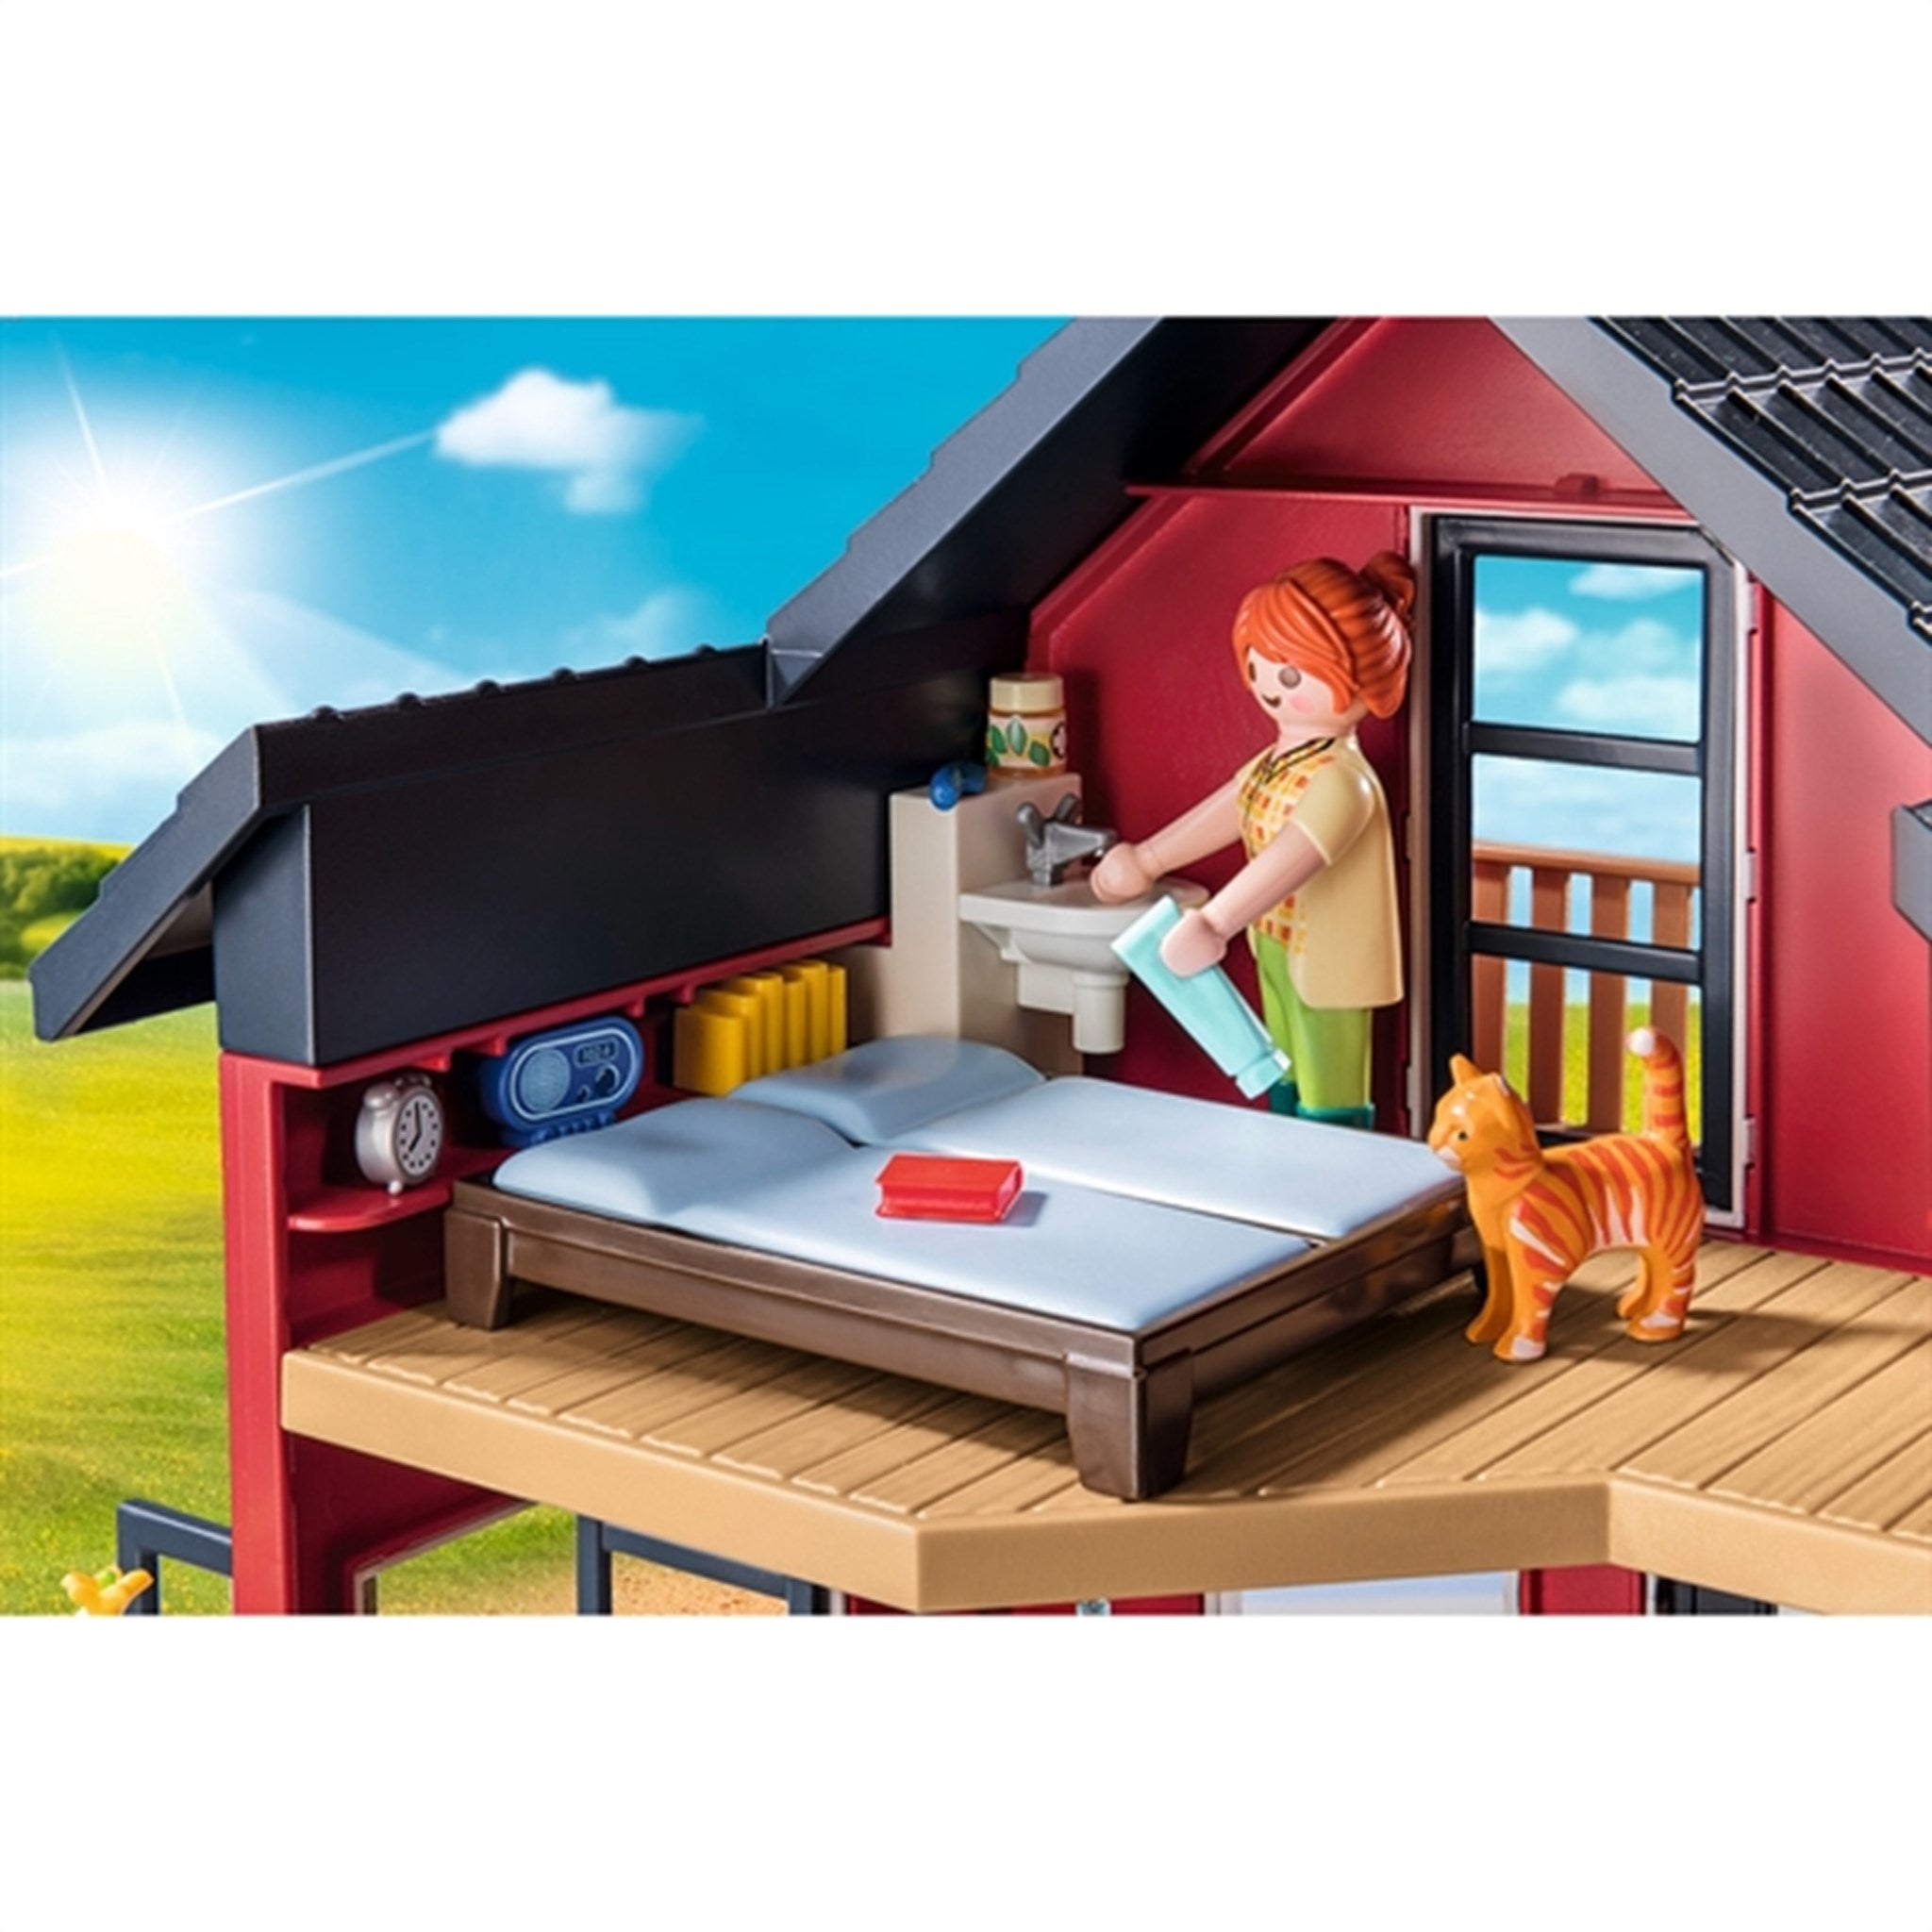 Playmobil® Country - Farmhouse 3